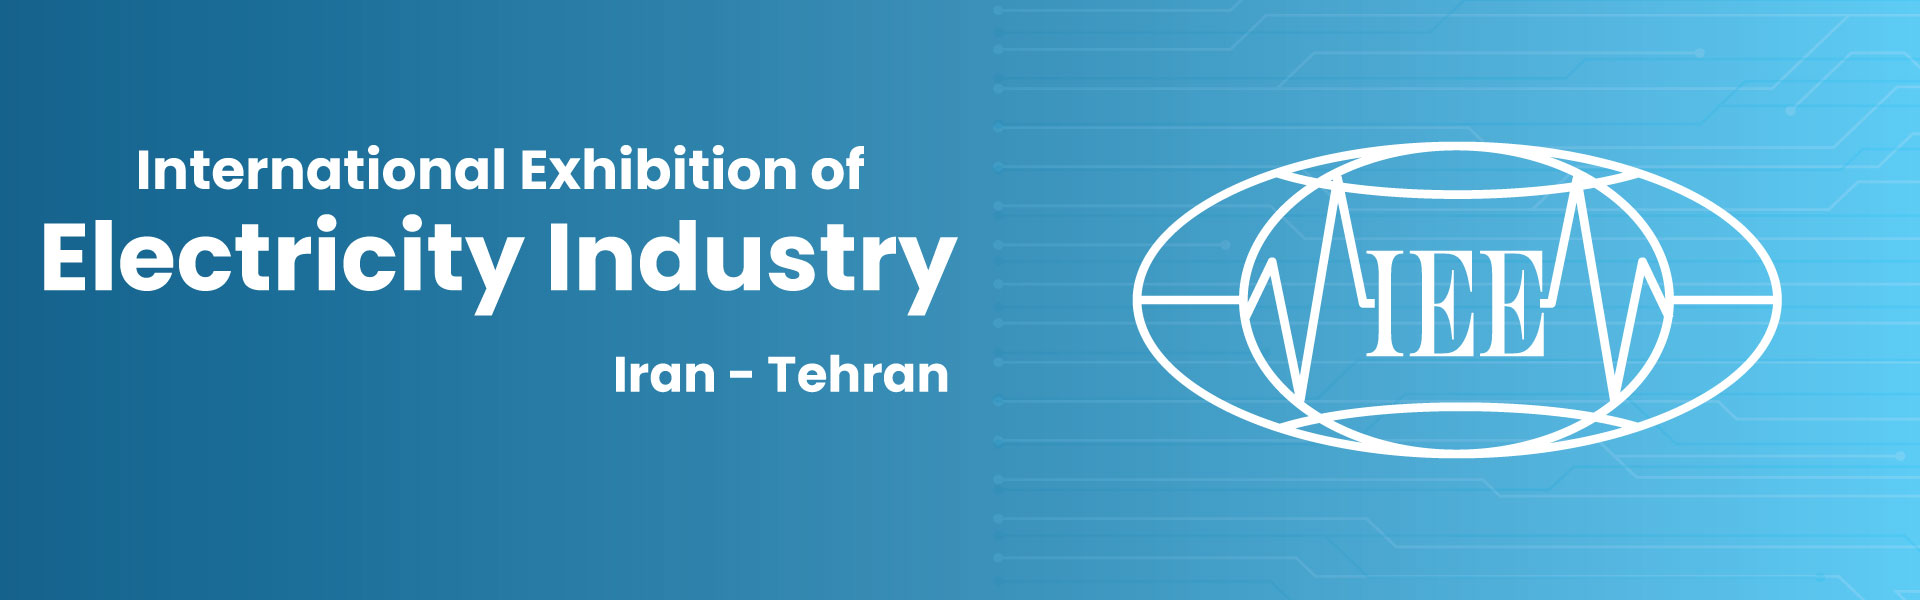 Electricity Industry Exhibition of Iran Tehran (IEE)